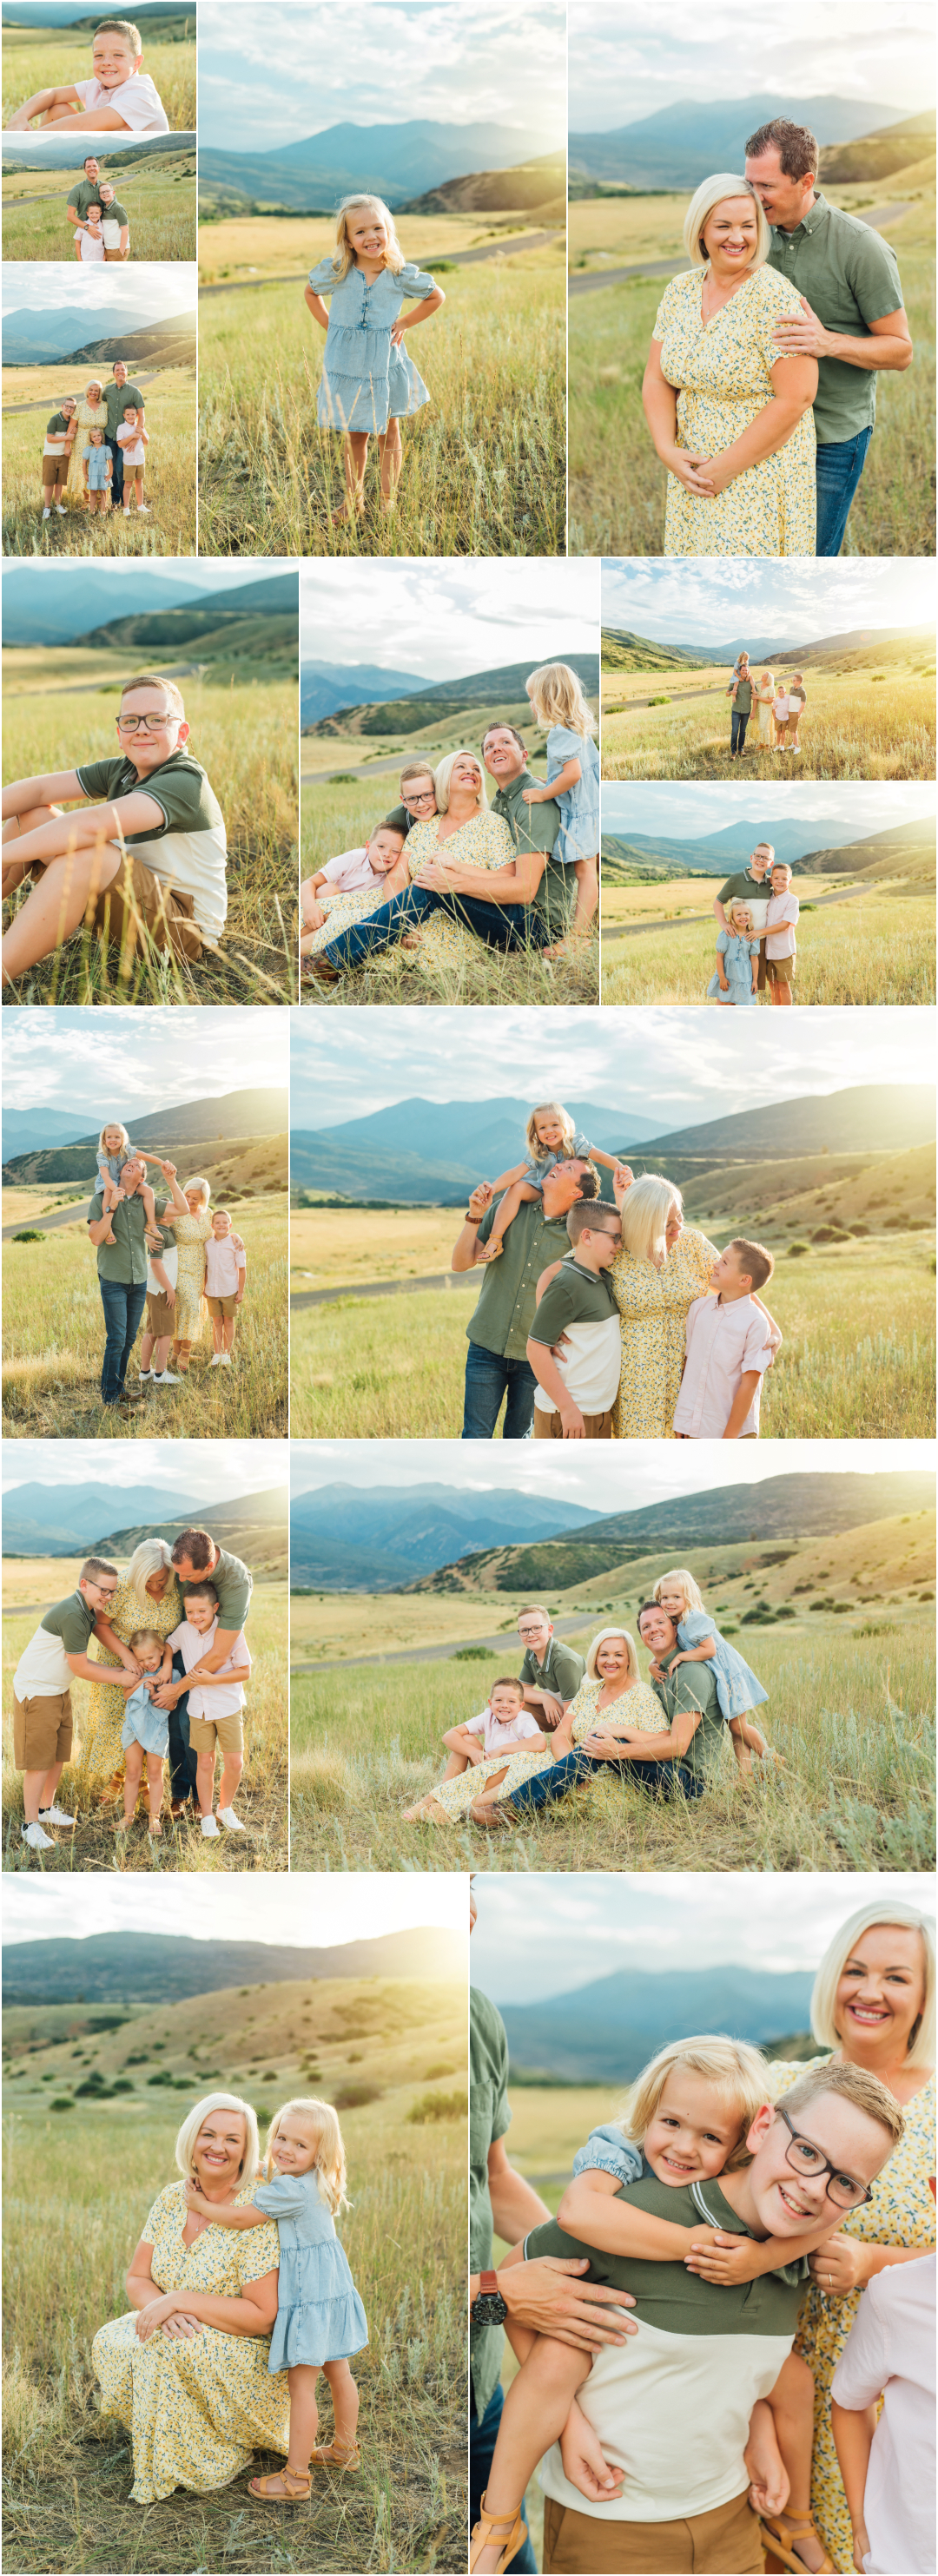 Spanish Fork Canyon Photographer - Summer Family Photography in Utah